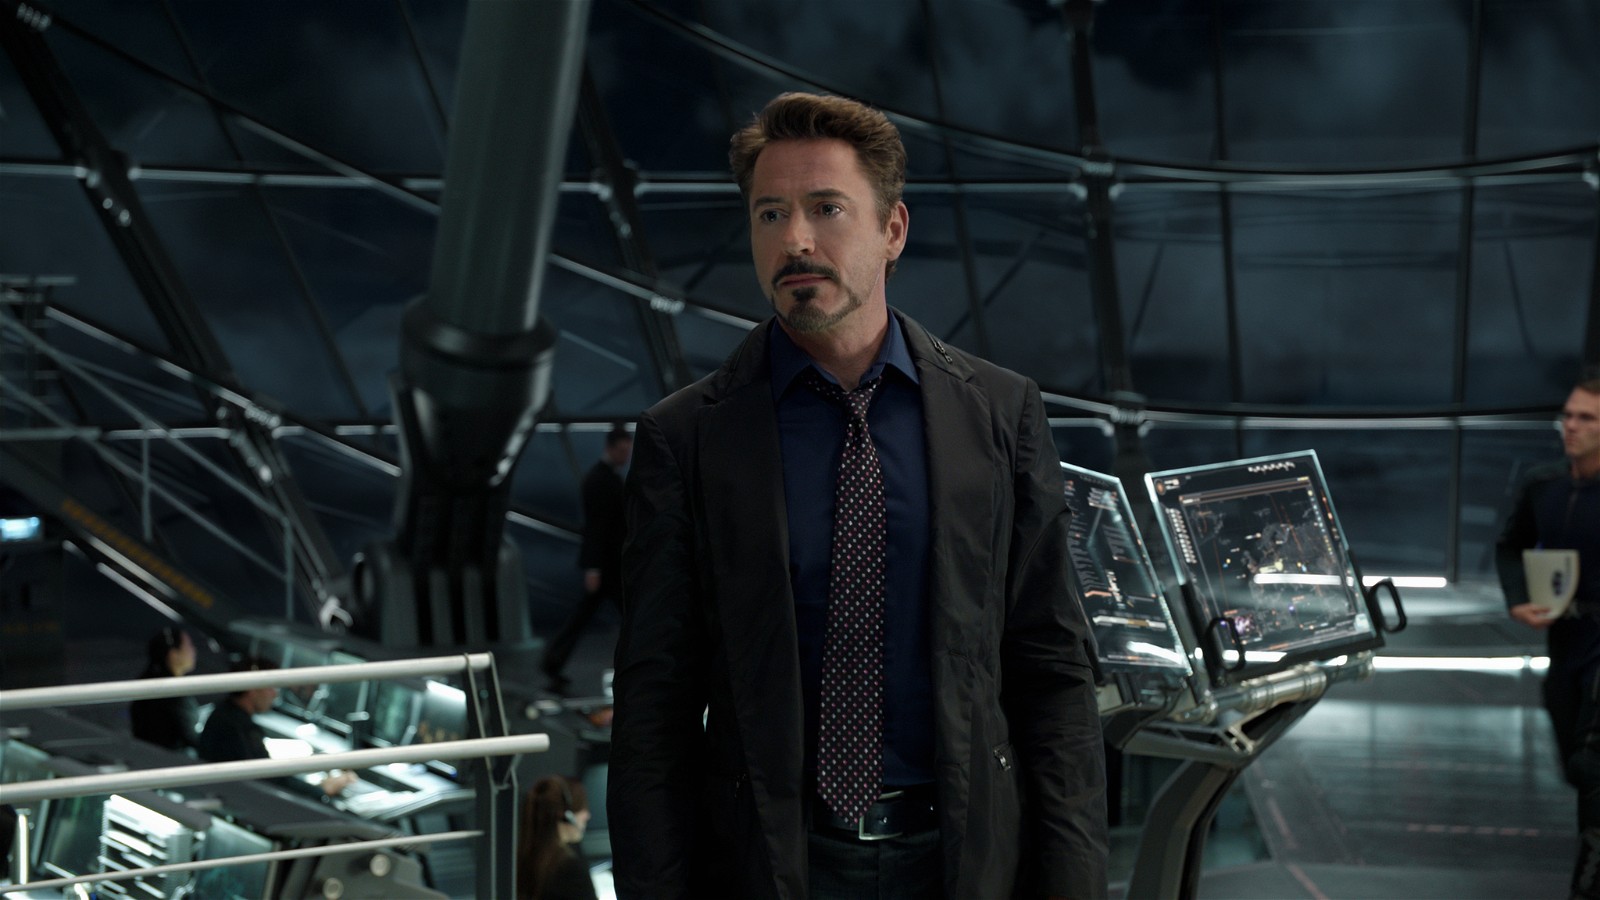 Robert Downey Jr. as Iron Man in a still from The Avengers